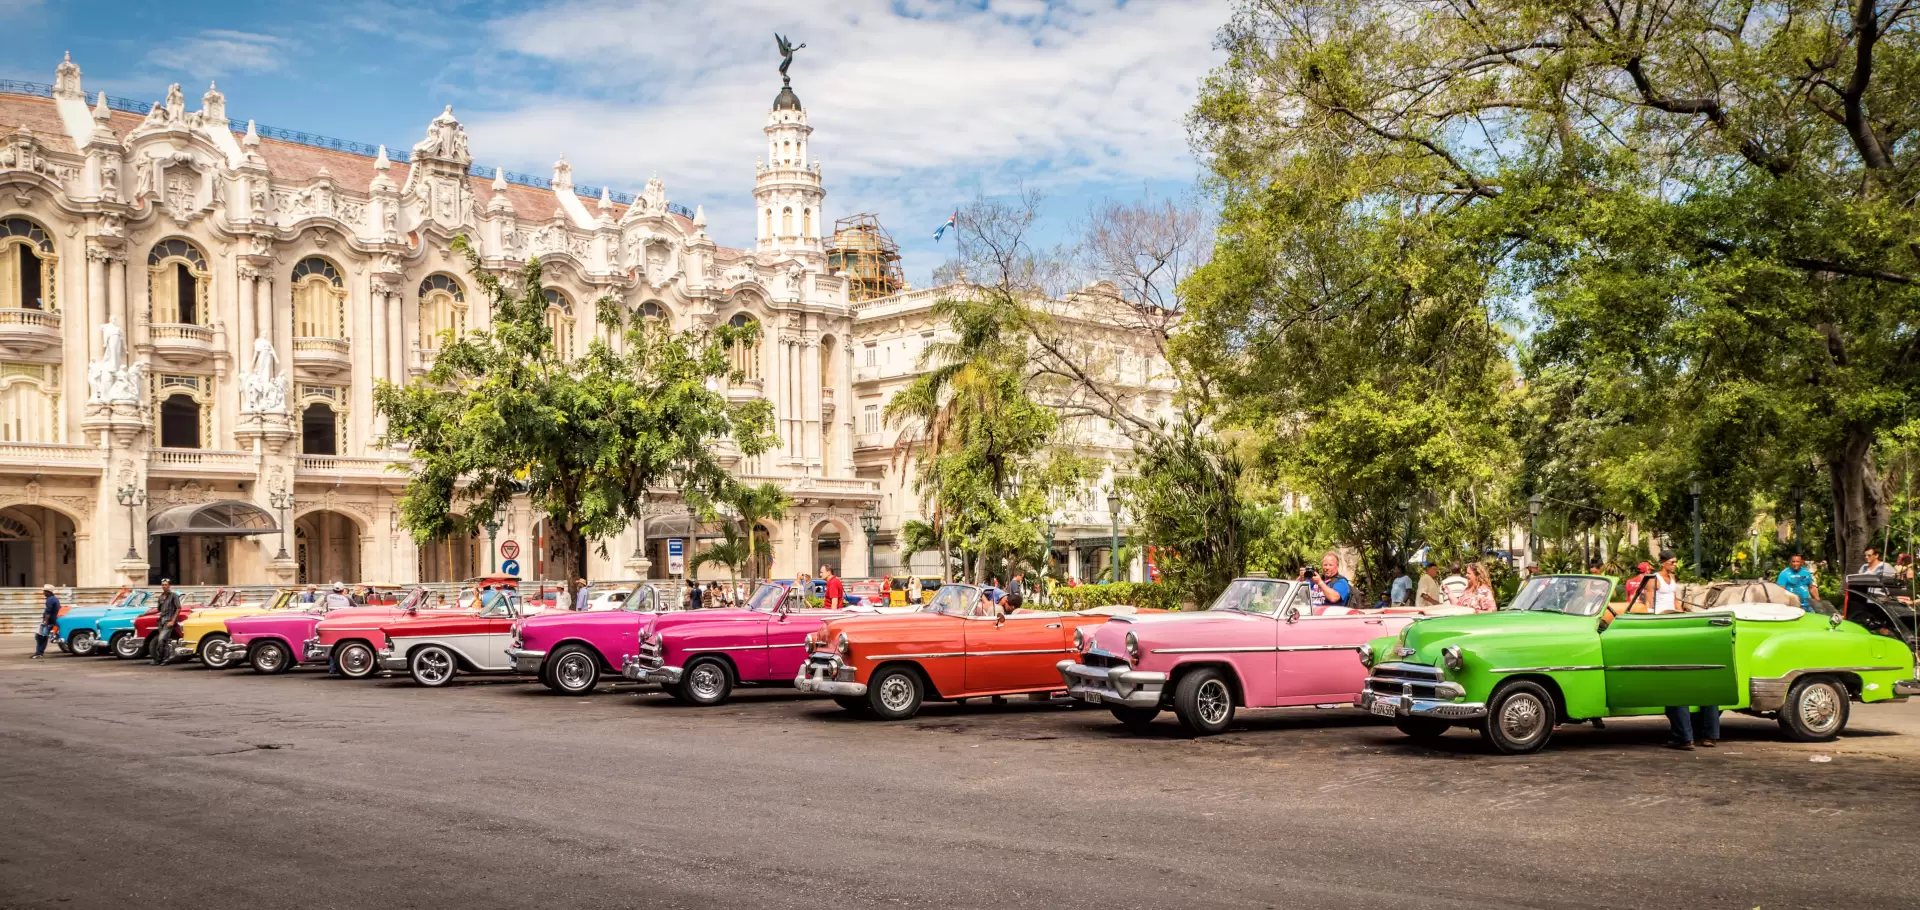 Cuba: Varadero & Havana